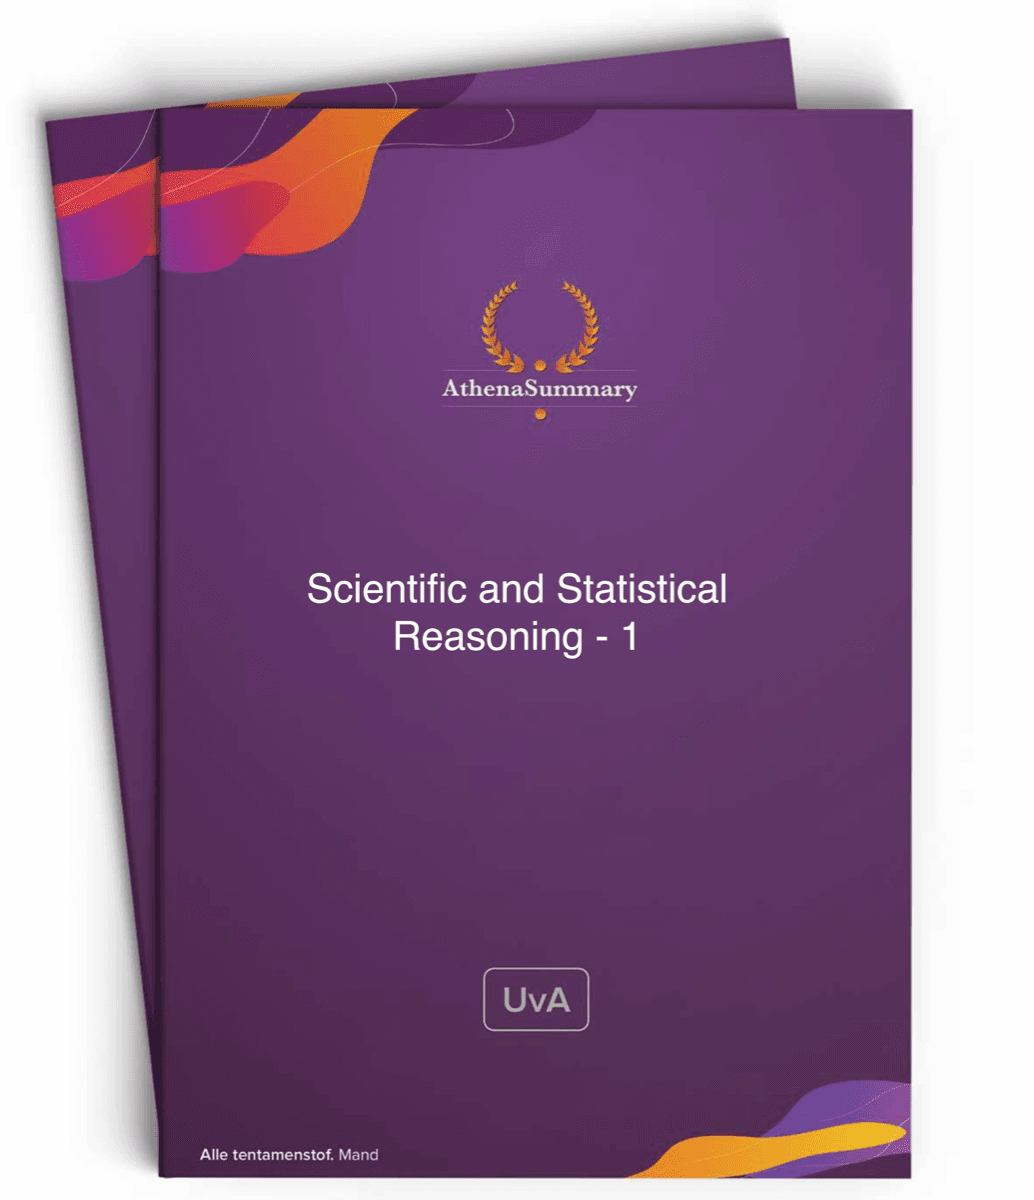 Literature Summary: Scientific and Statistical Reasoning - 1